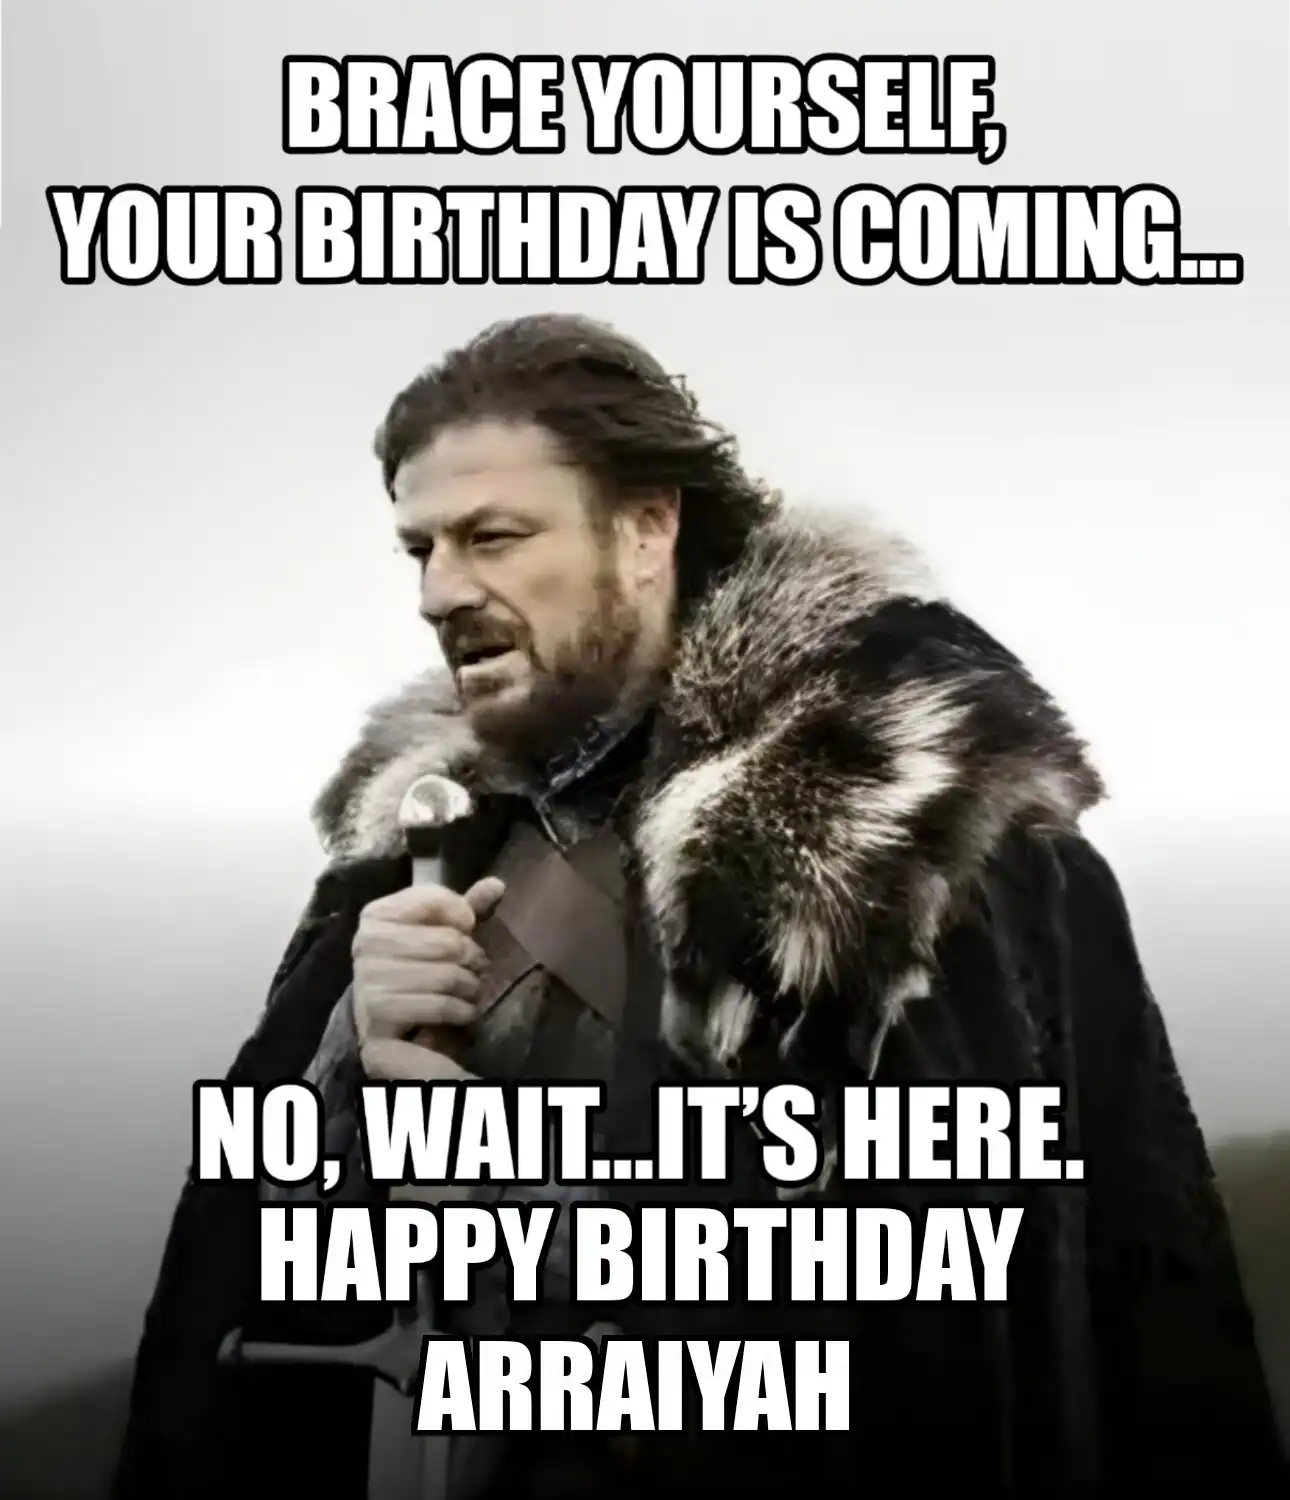 Happy Birthday Arraiyah Brace Yourself Your Birthday Is Coming Meme